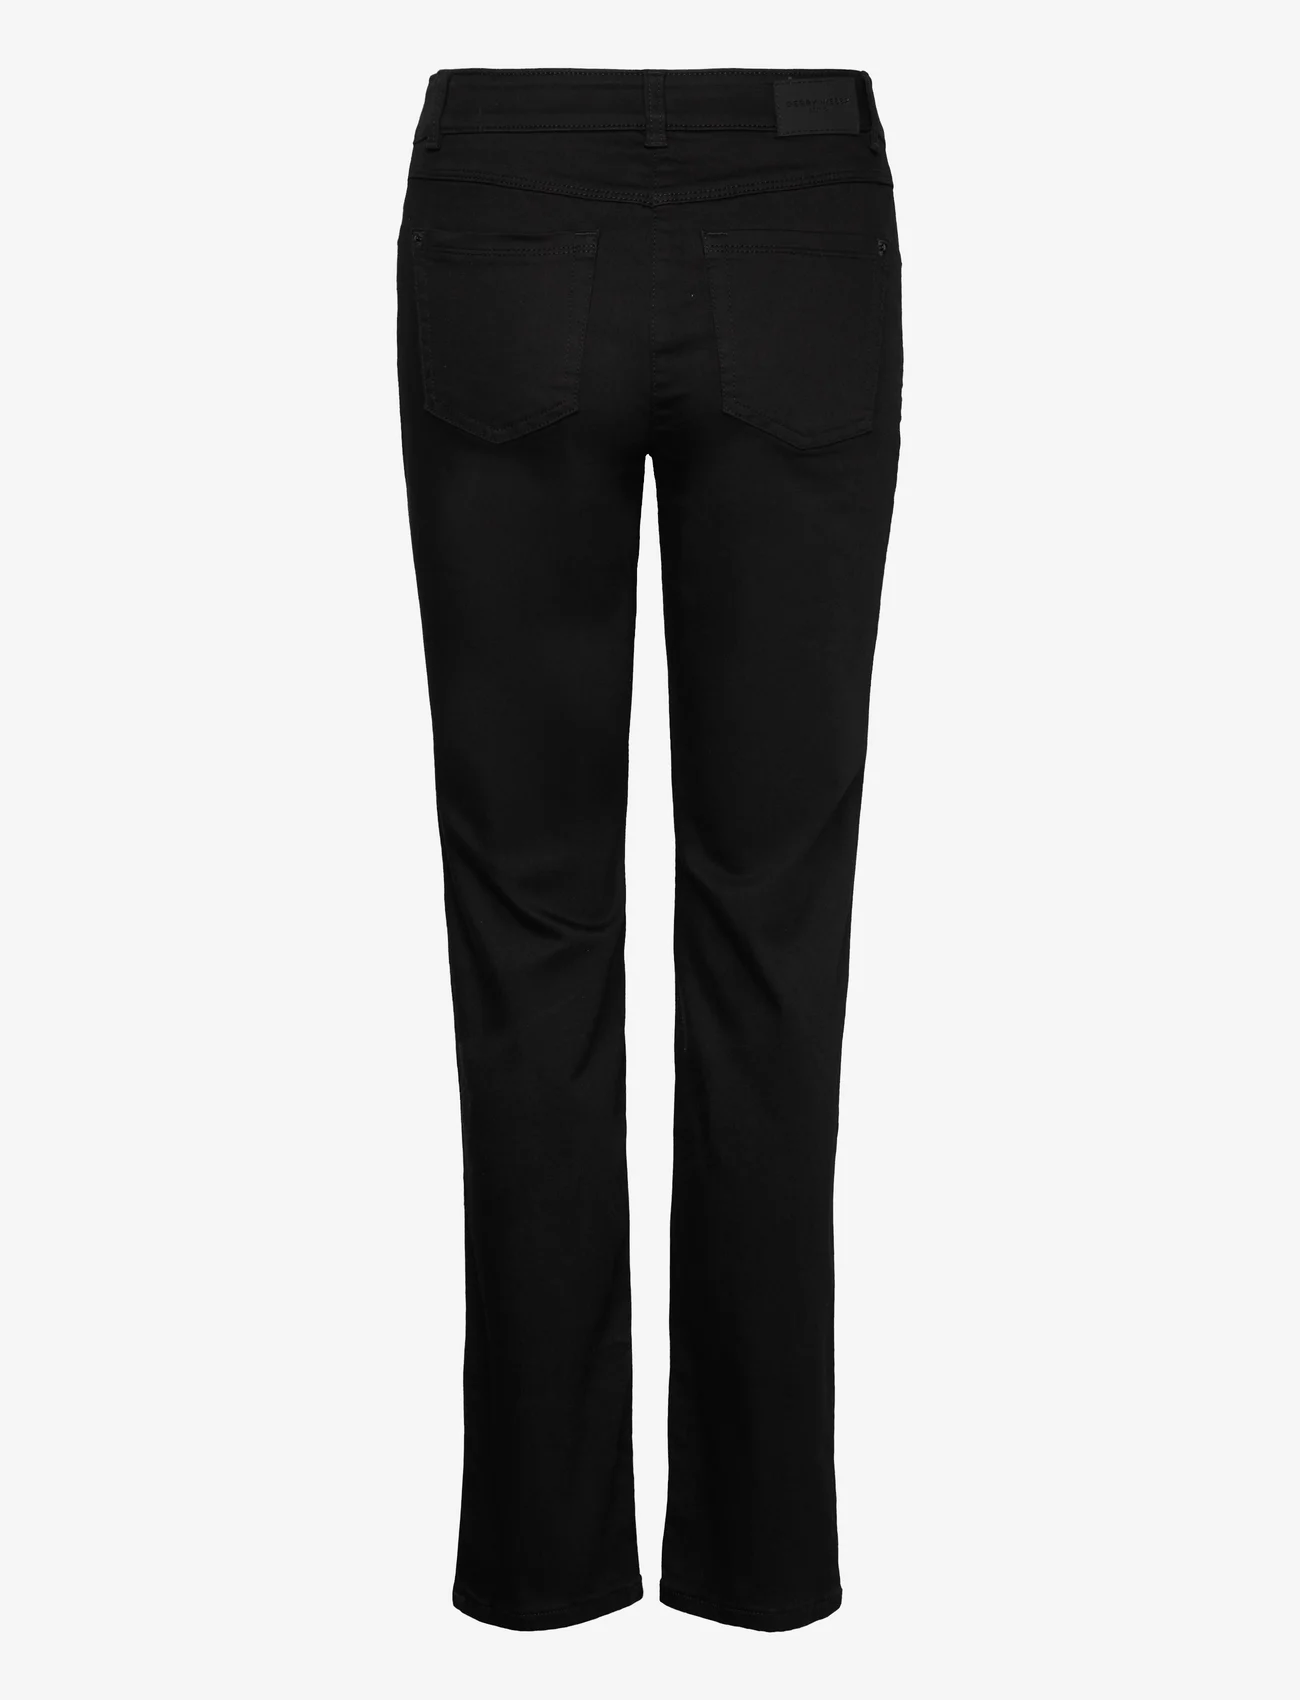 Gerry Weber Edition - JEANS LONG - raka jeans - black black denim - 1